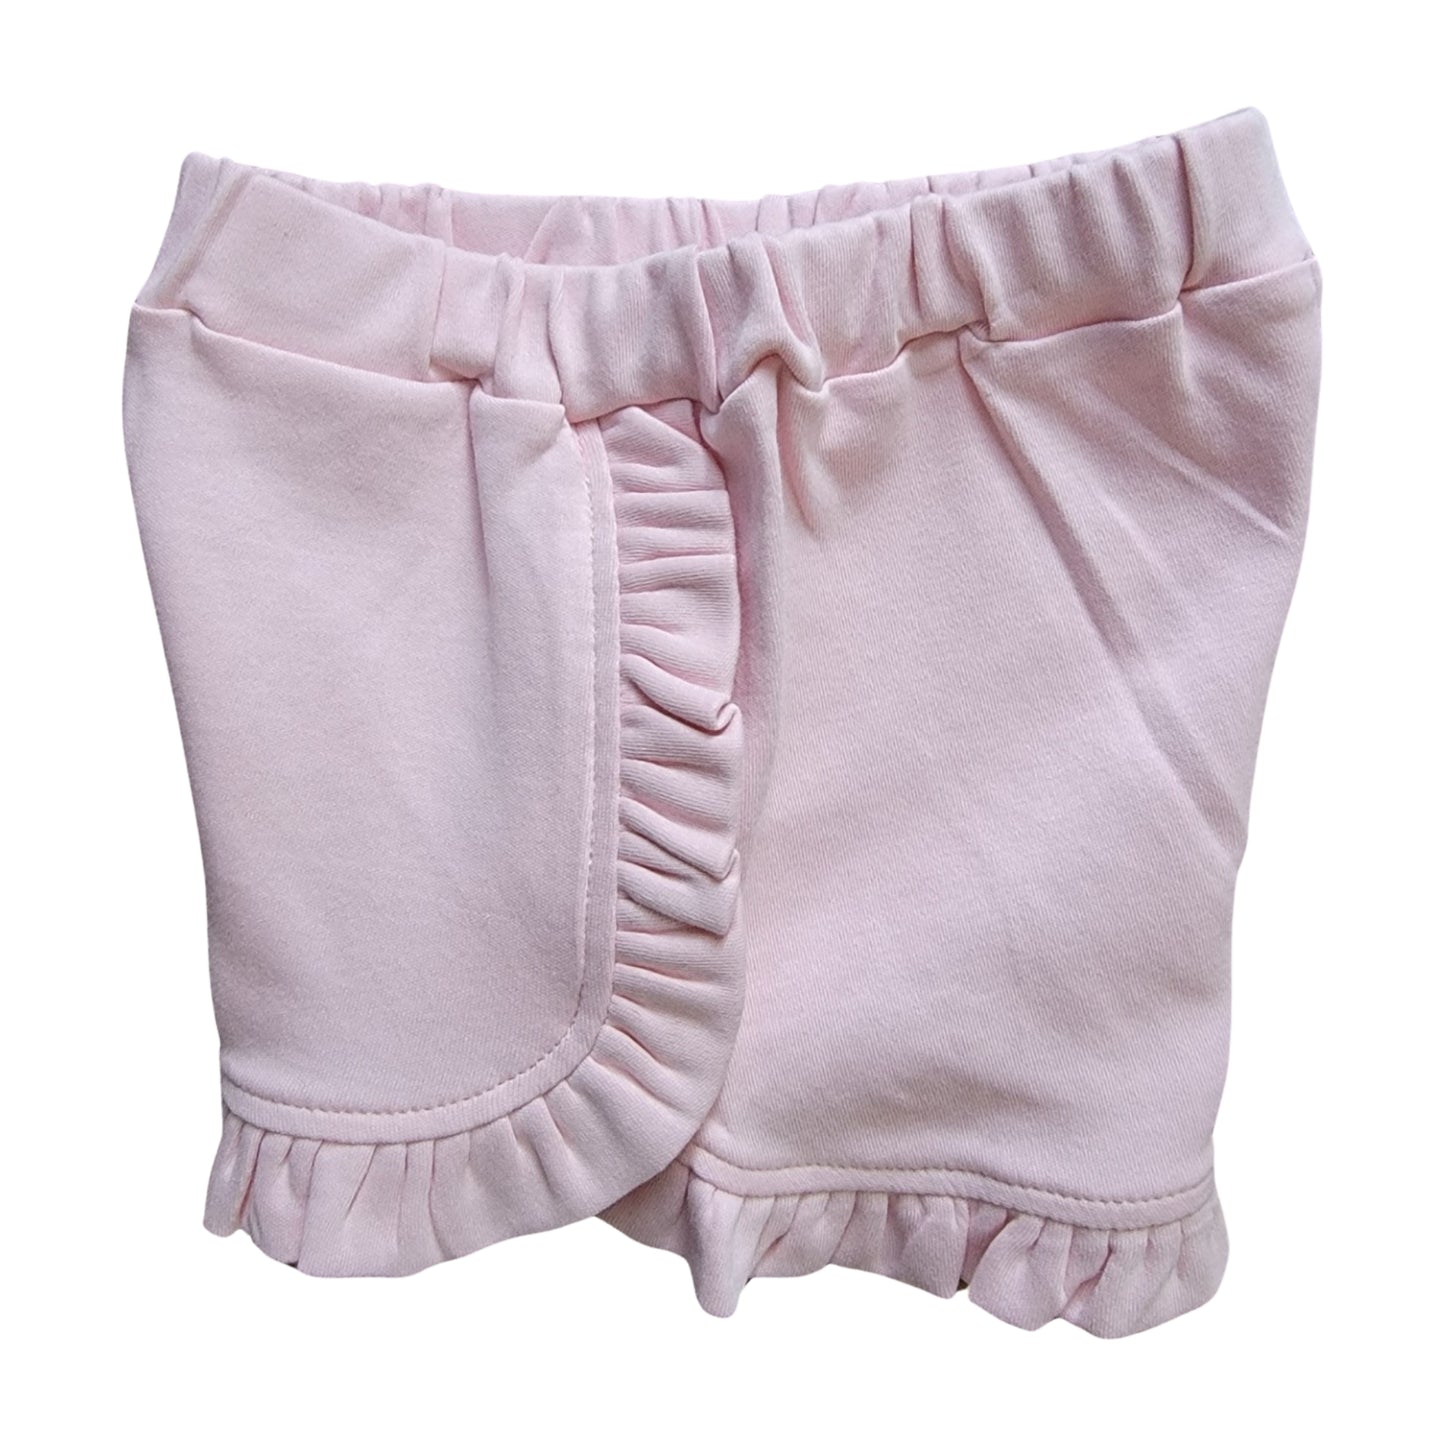 Girl Cotton Shorts, Light Pink Round Ruffle